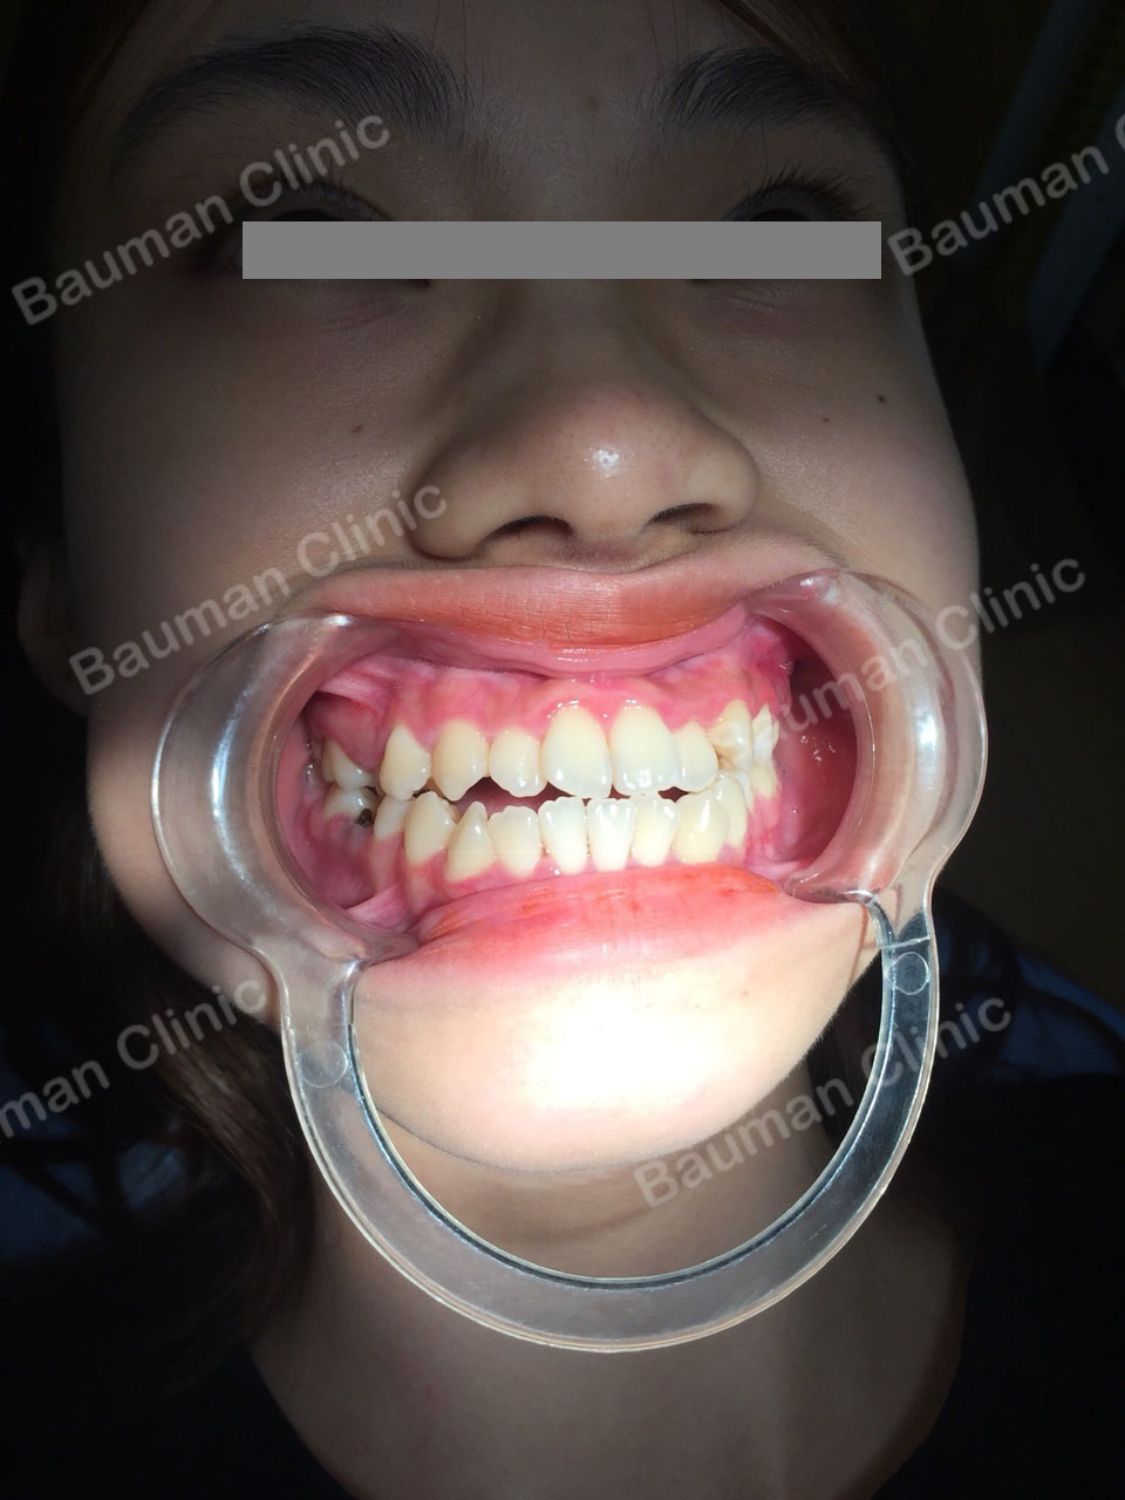 Ca niềng răng số 5074 - Nha khoa Bauman Clinic